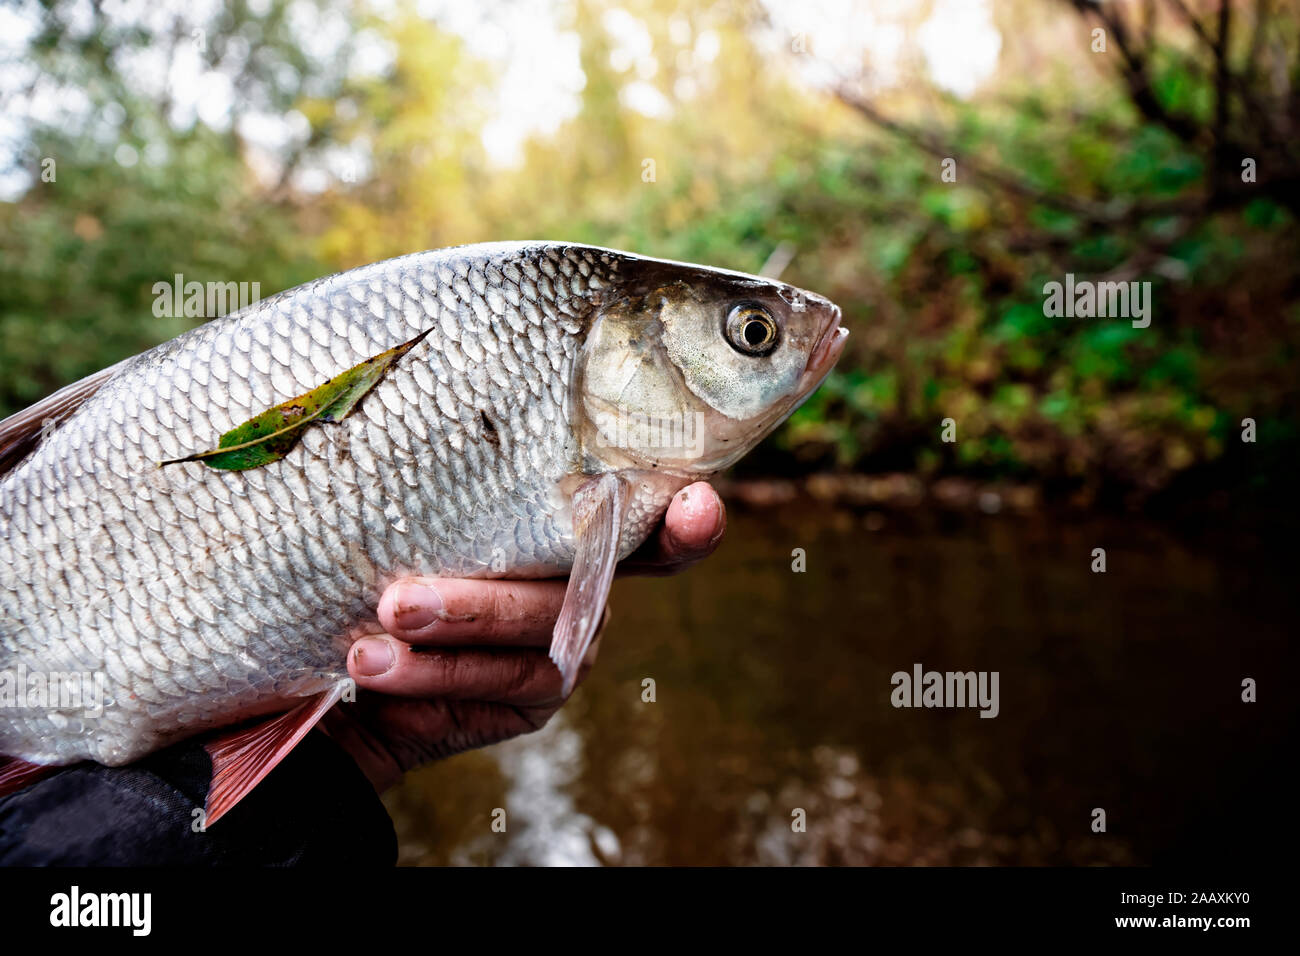 Big orfe in fisherman's hand, toned image Stock Photo